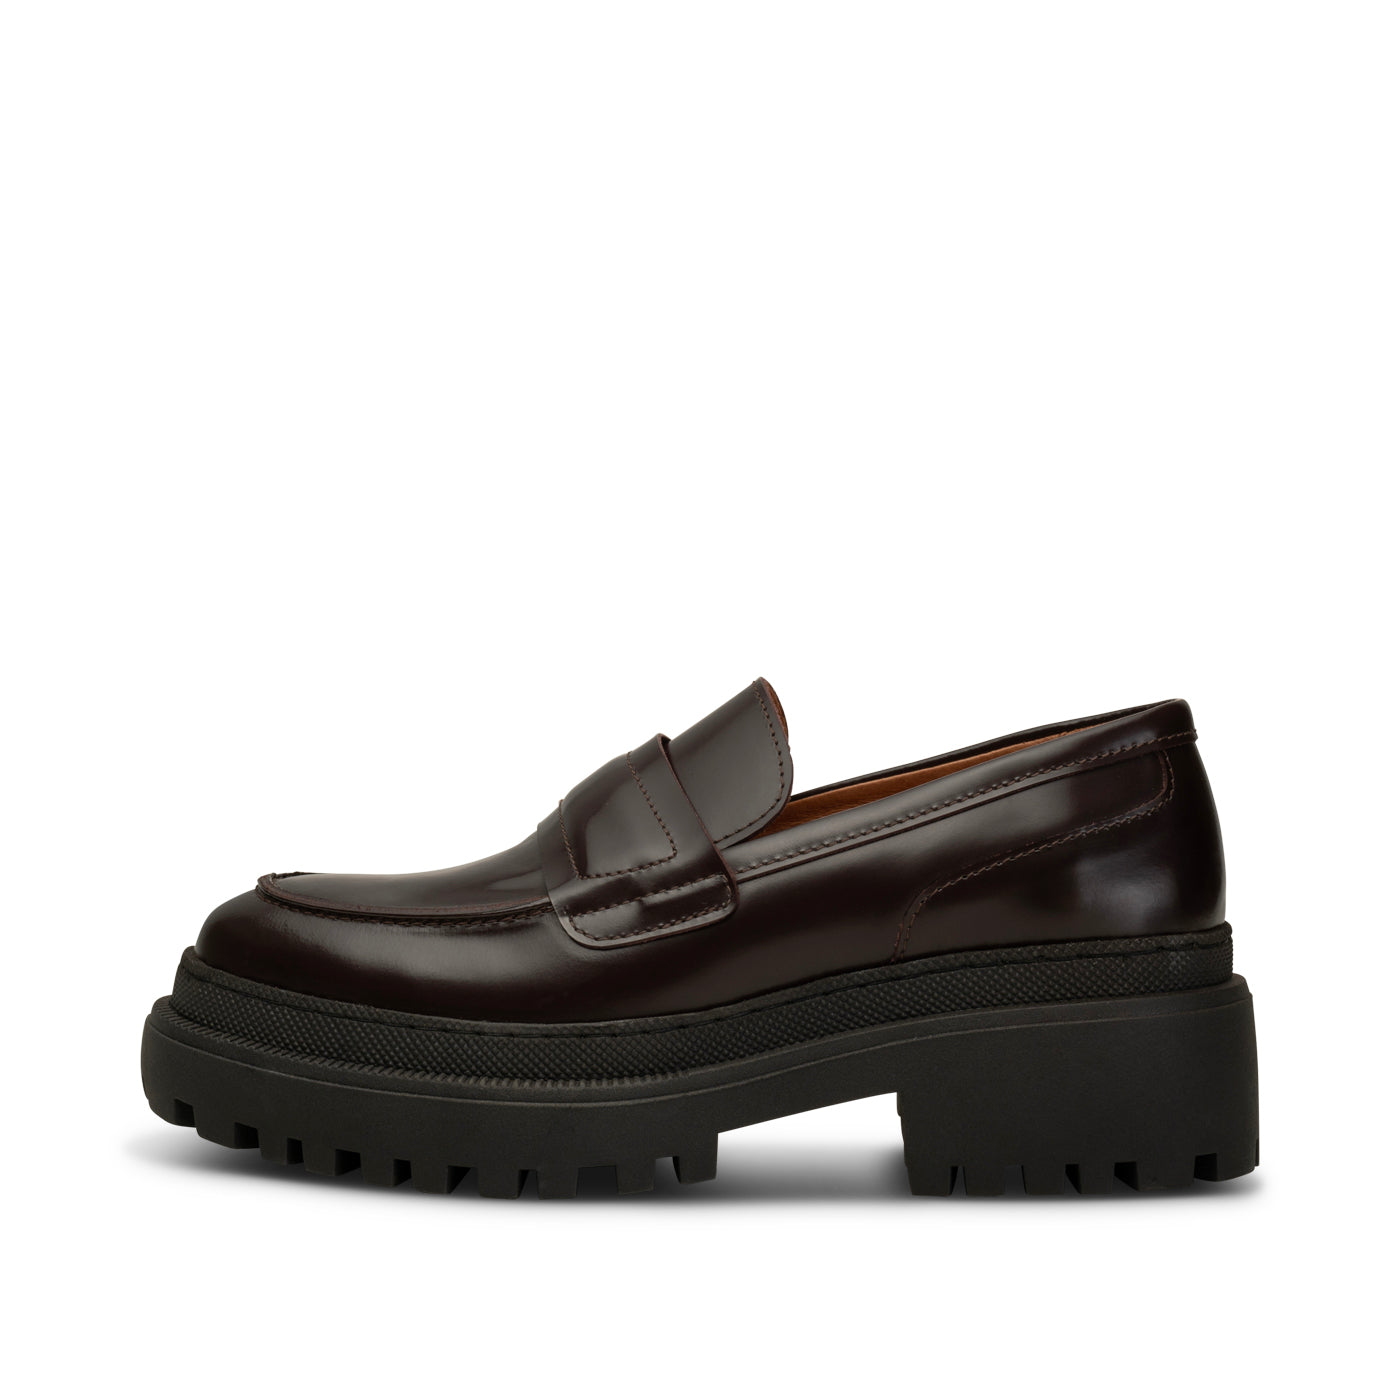 Iona loafer leather - BORDEUX HIGH SHINE